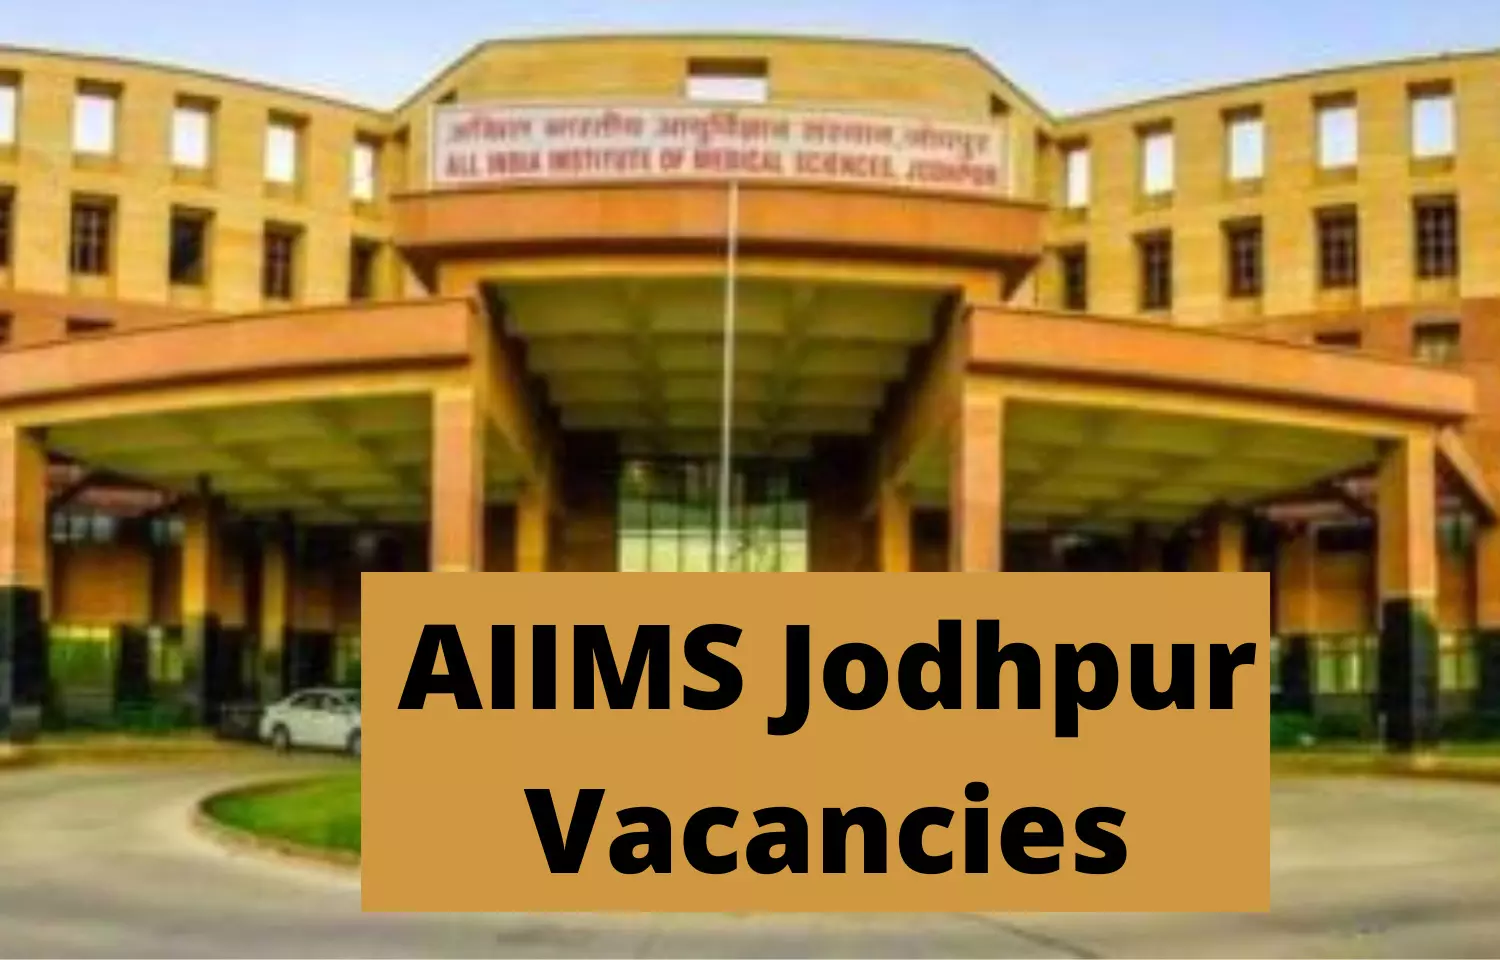 Walk In Interview At AIIMS Jodhpur For Senior Resident Post Vacancies, Details